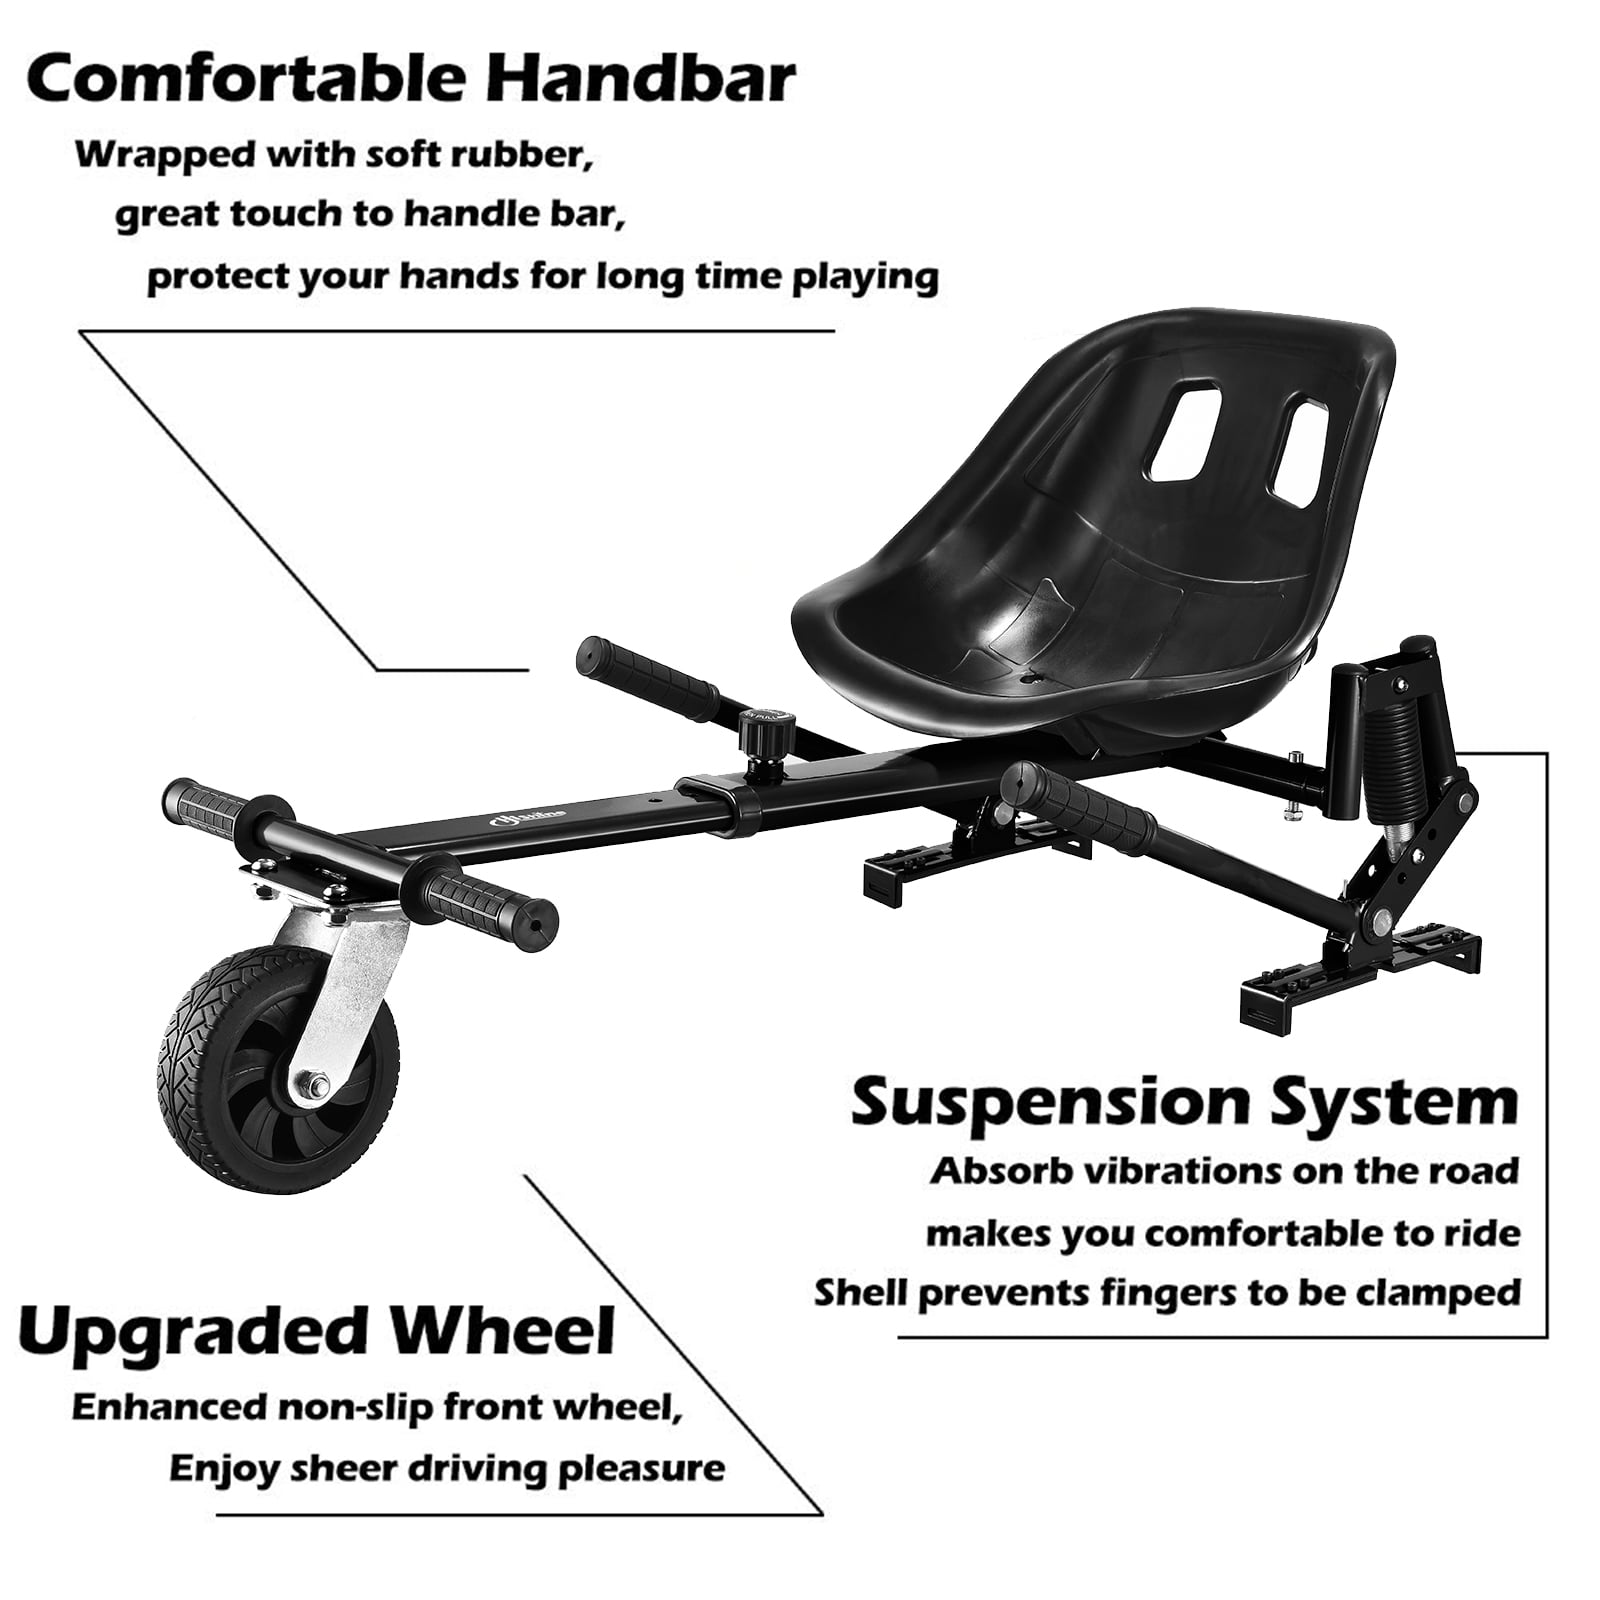 Black Hover Seat Attachment Hover Go Kart Go Cart Accessories Fun for Kids 